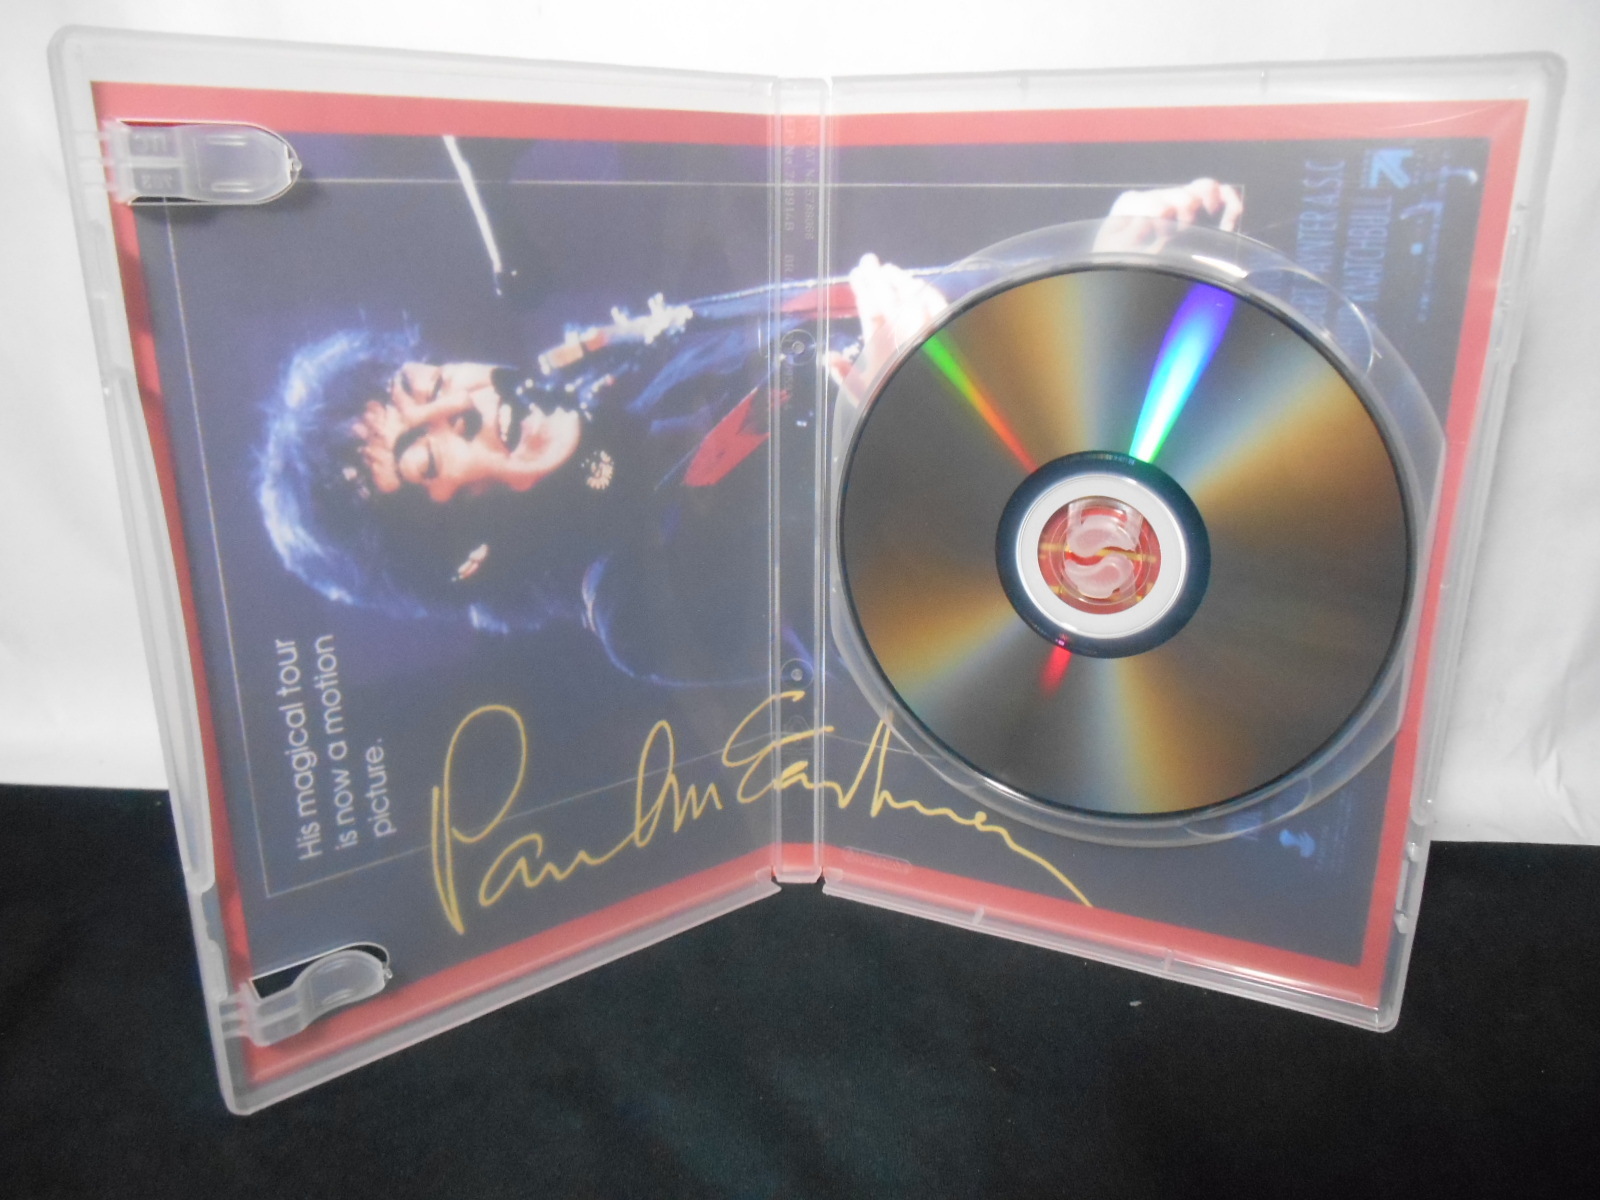 DVD - Paul McCartney - Get Back